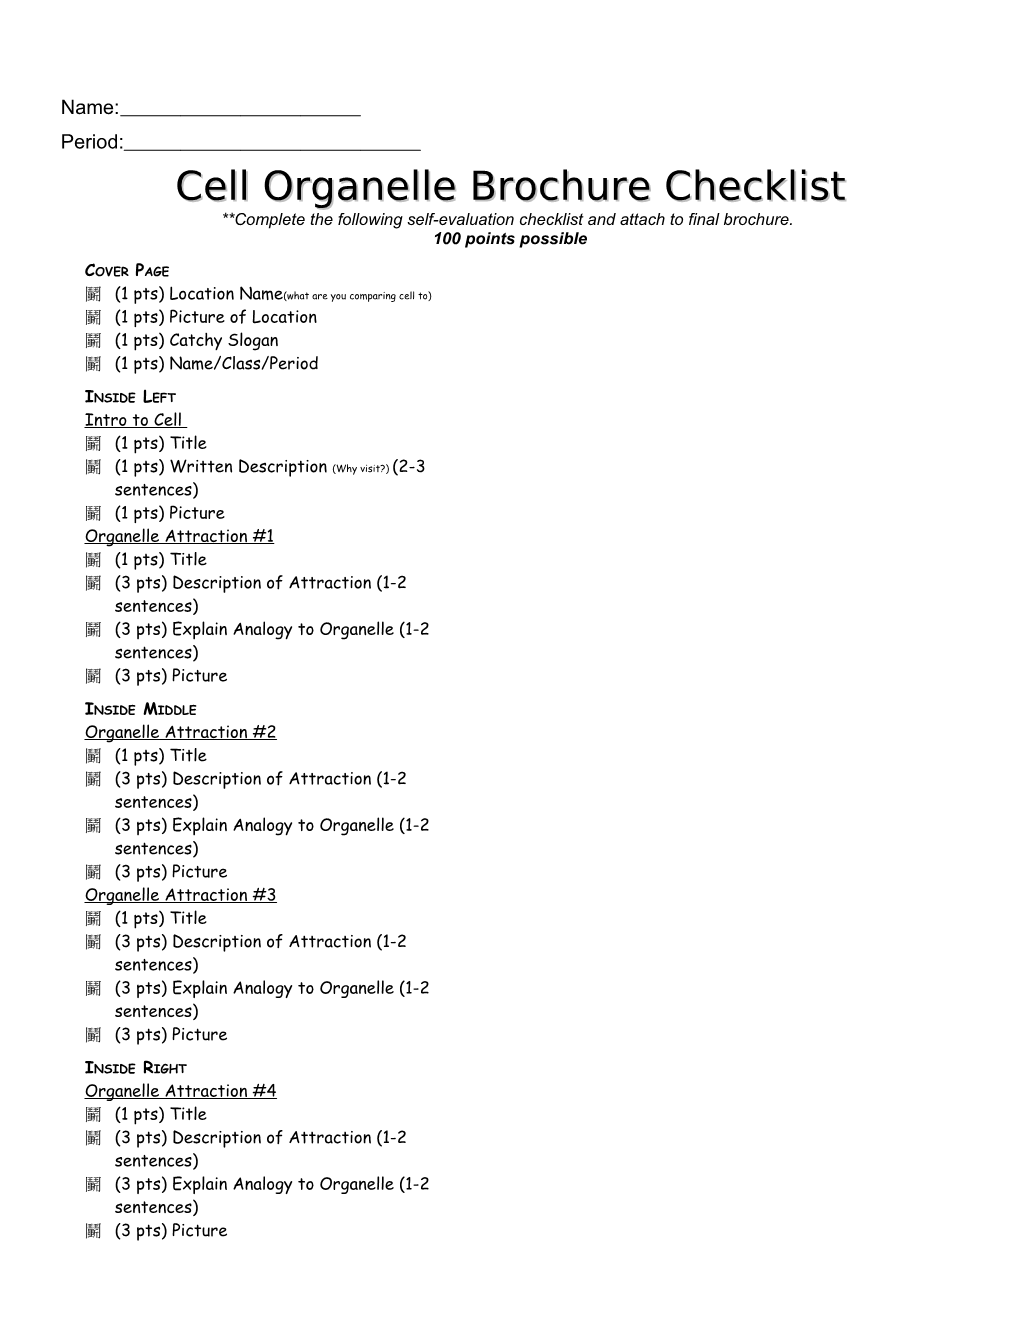 Cell Organelle Brochure Checklist